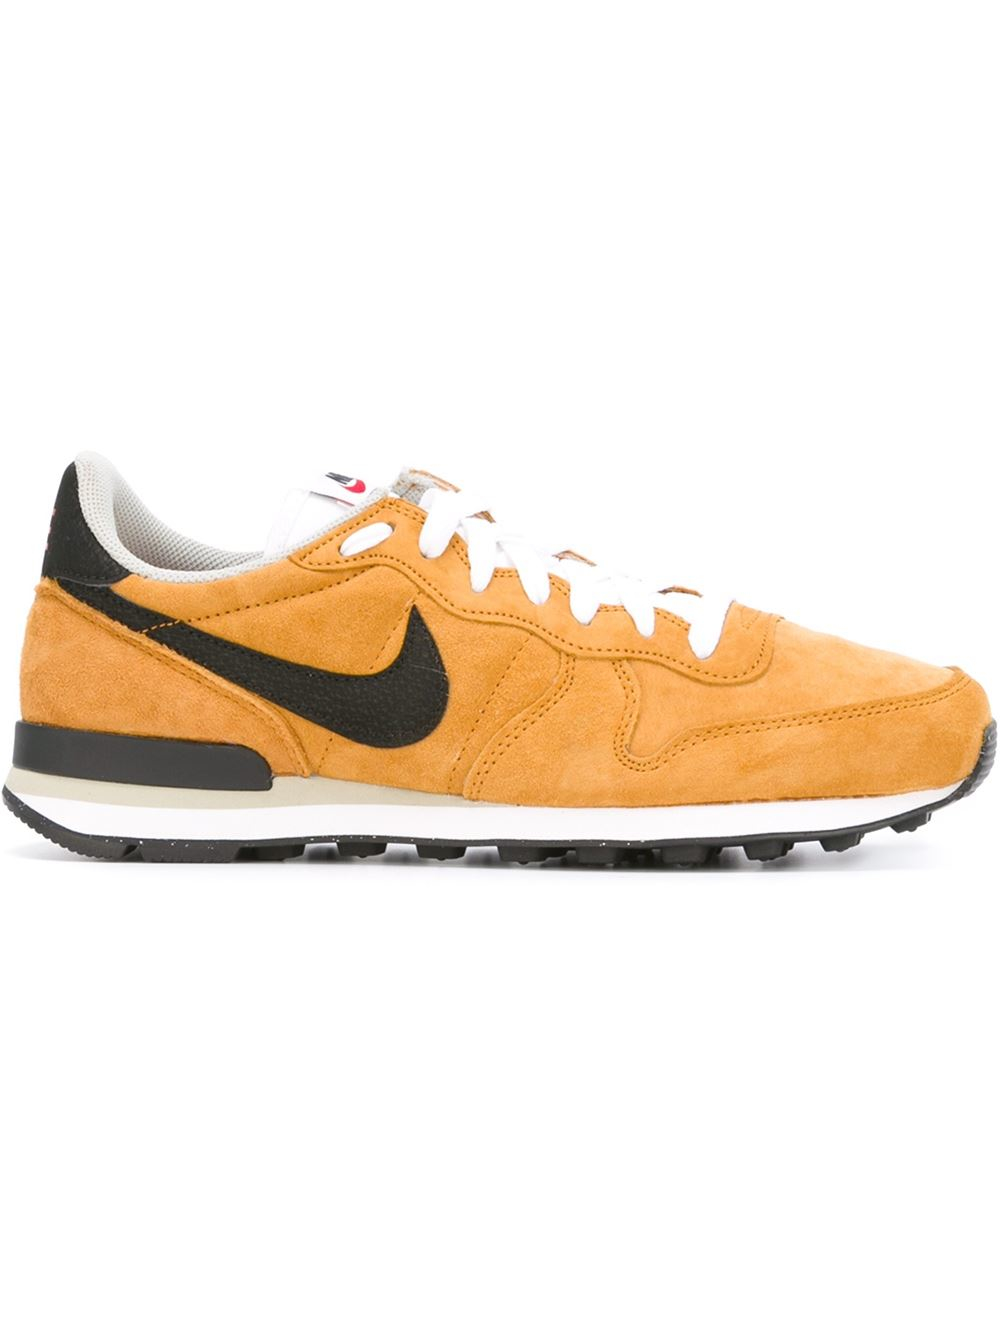 Nike 'internationalist' Sneakers in Yellow & Orange (Yellow) for Men - Lyst